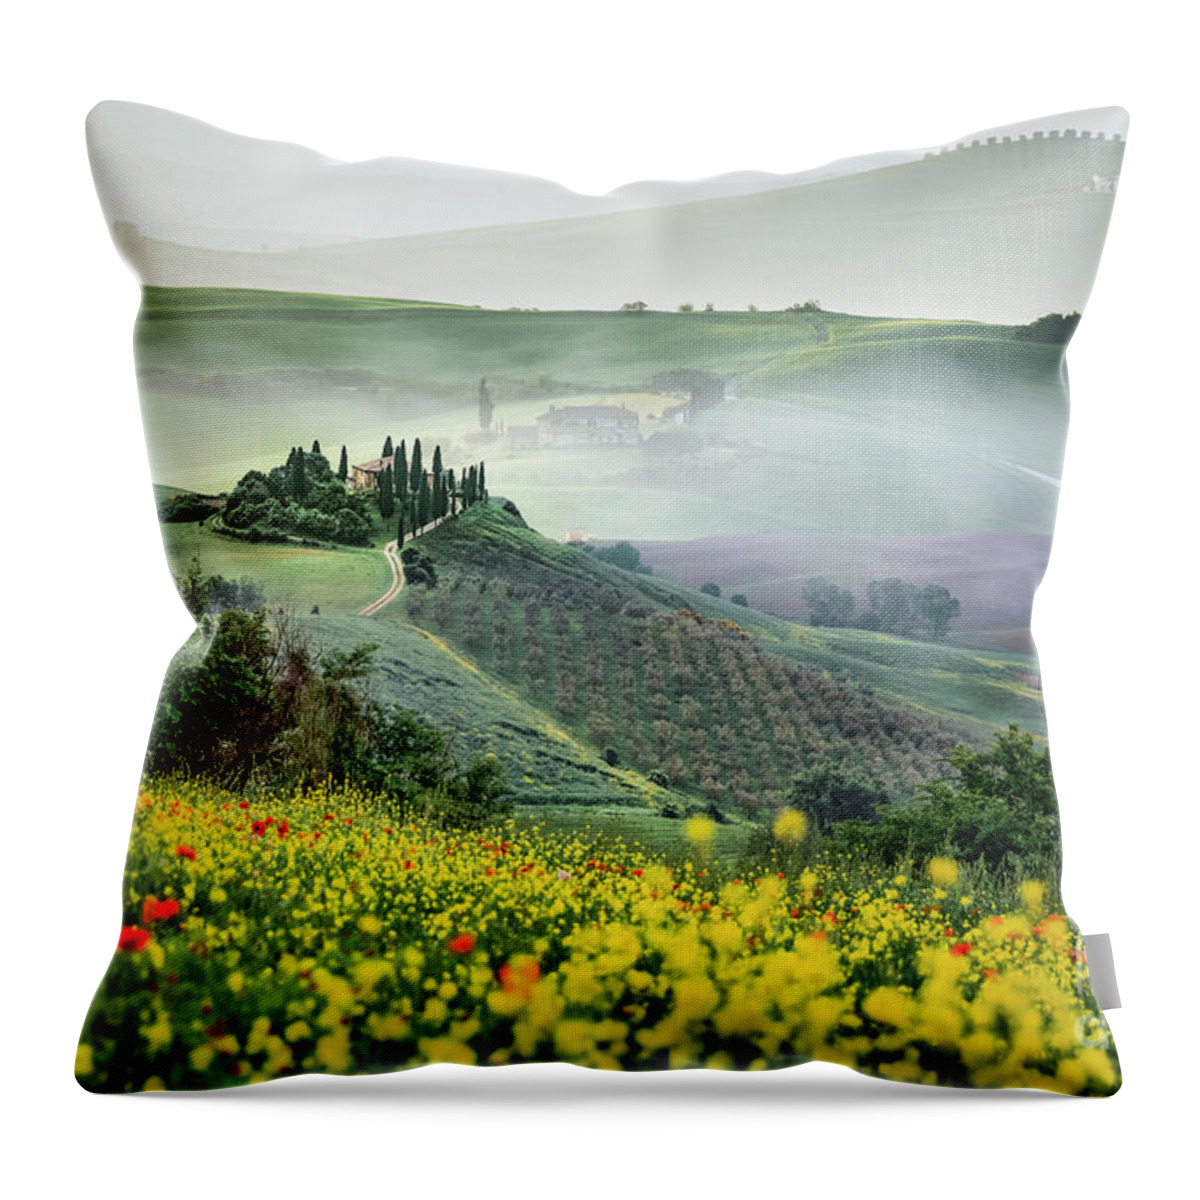 Kremsdorf Throw Pillow featuring the photograph Land Of Dreams by Evelina Kremsdorf